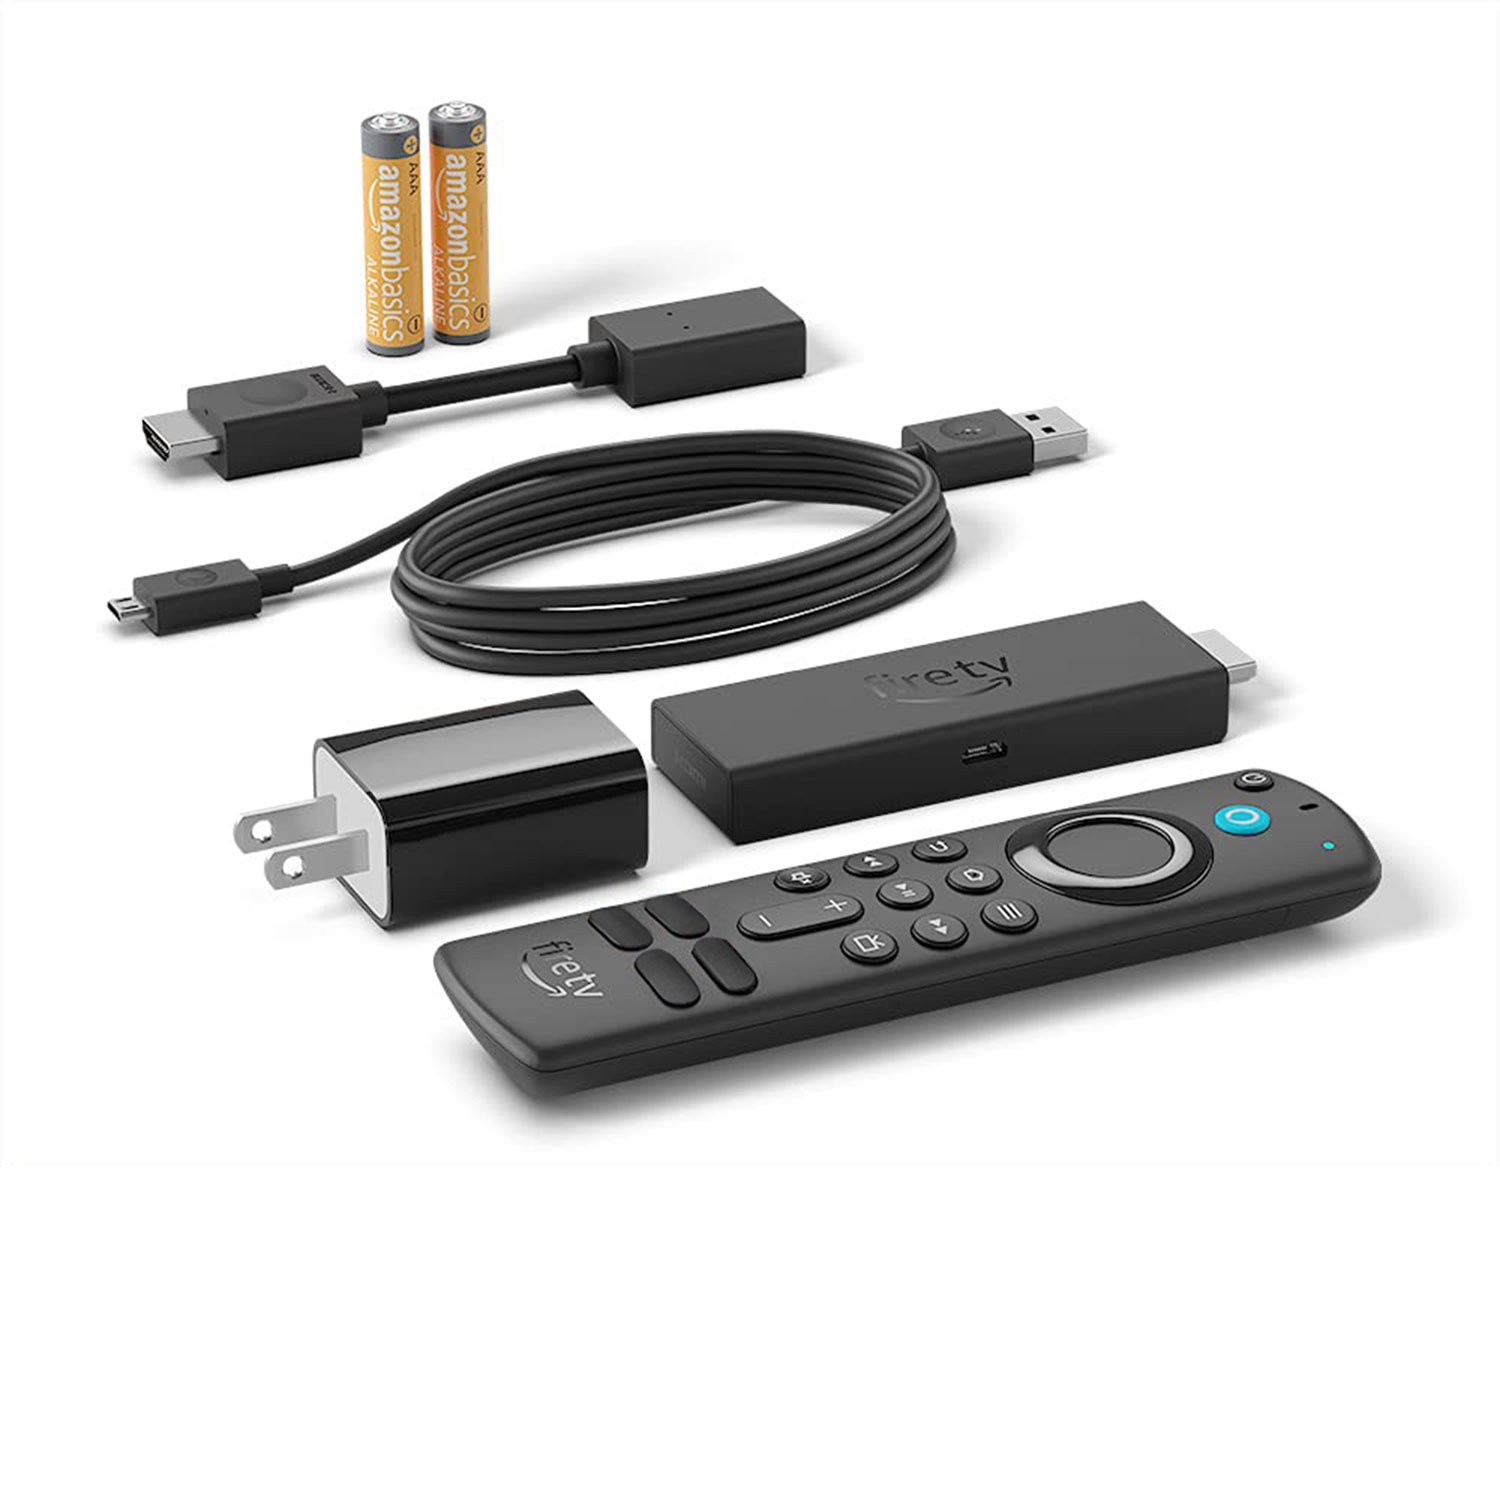 Amazon Fire TV Stick Lite Media Streamer with Alexa Voice Remote